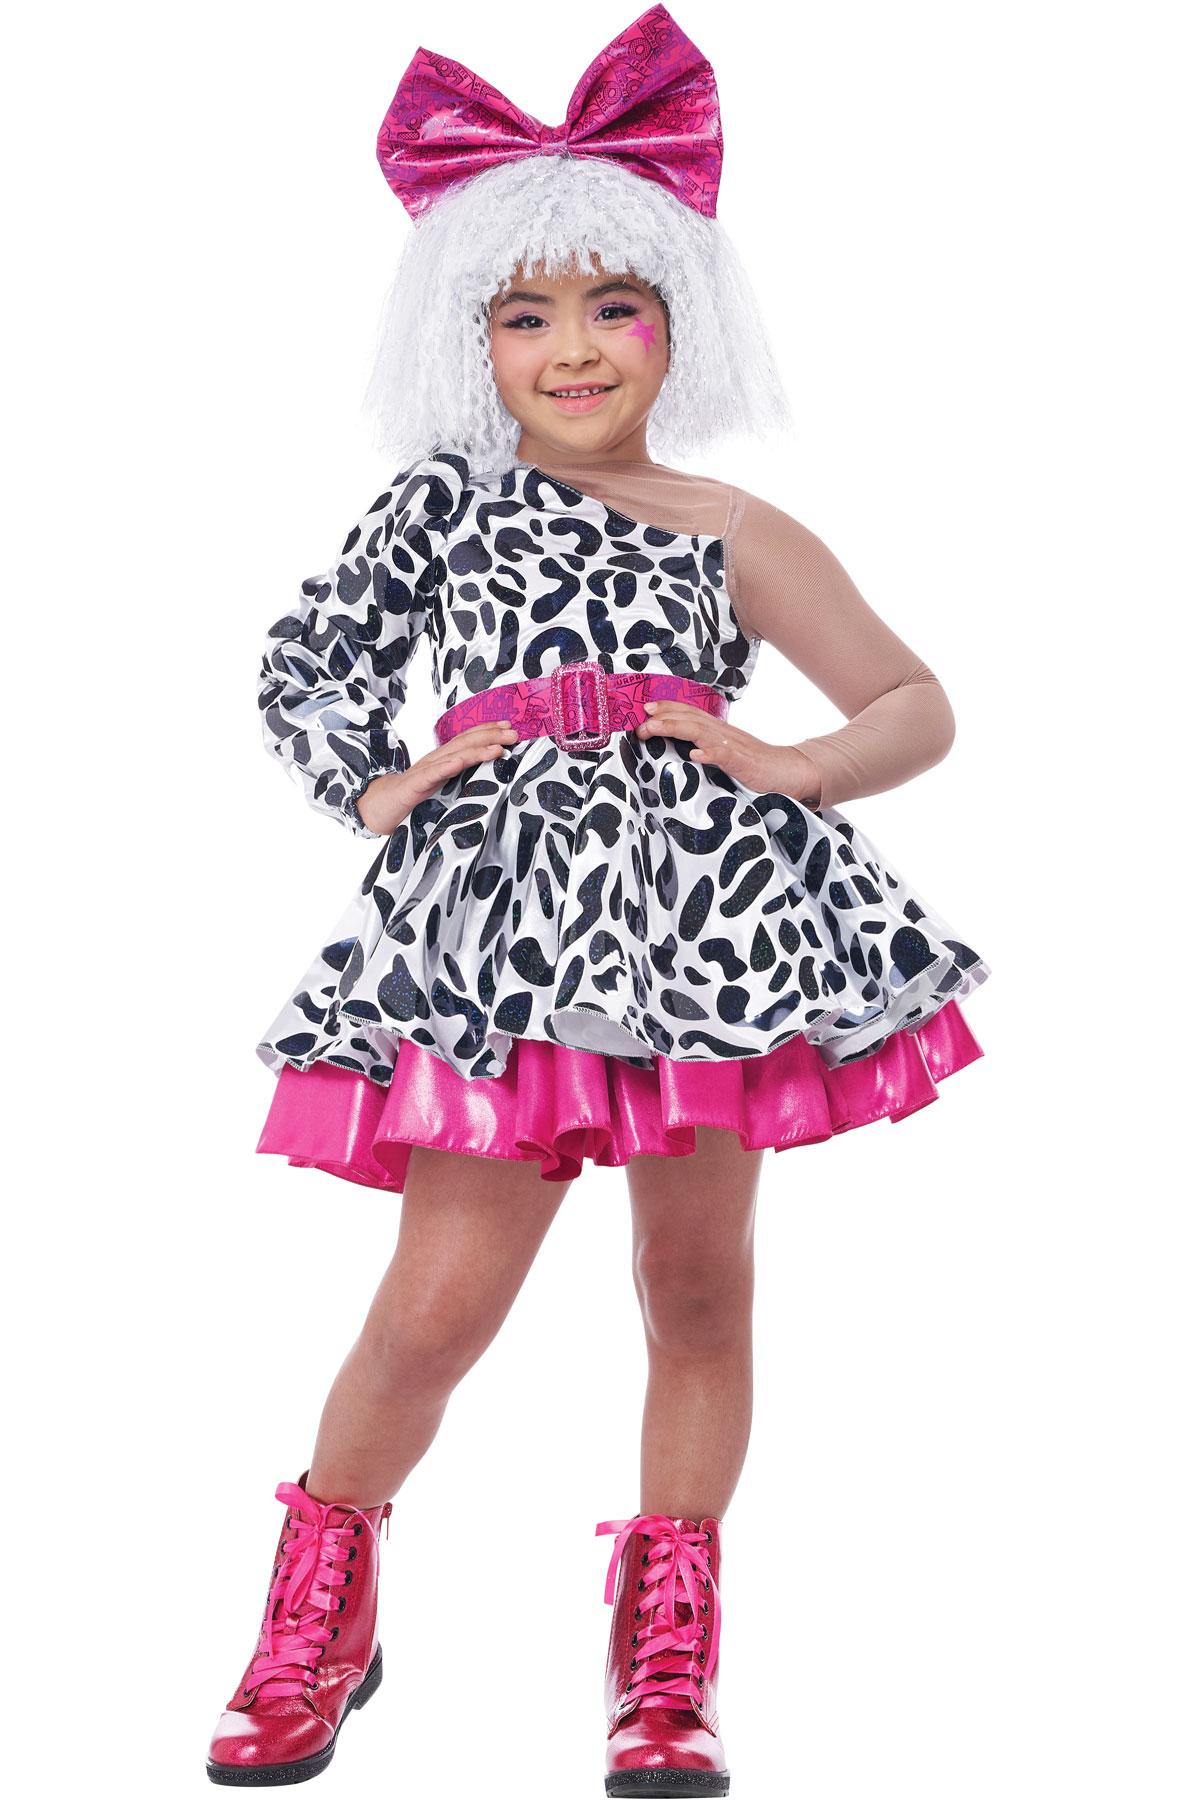 California Costume Licensed Diva Child Girls Disco Outfit 3022/102 | eBay